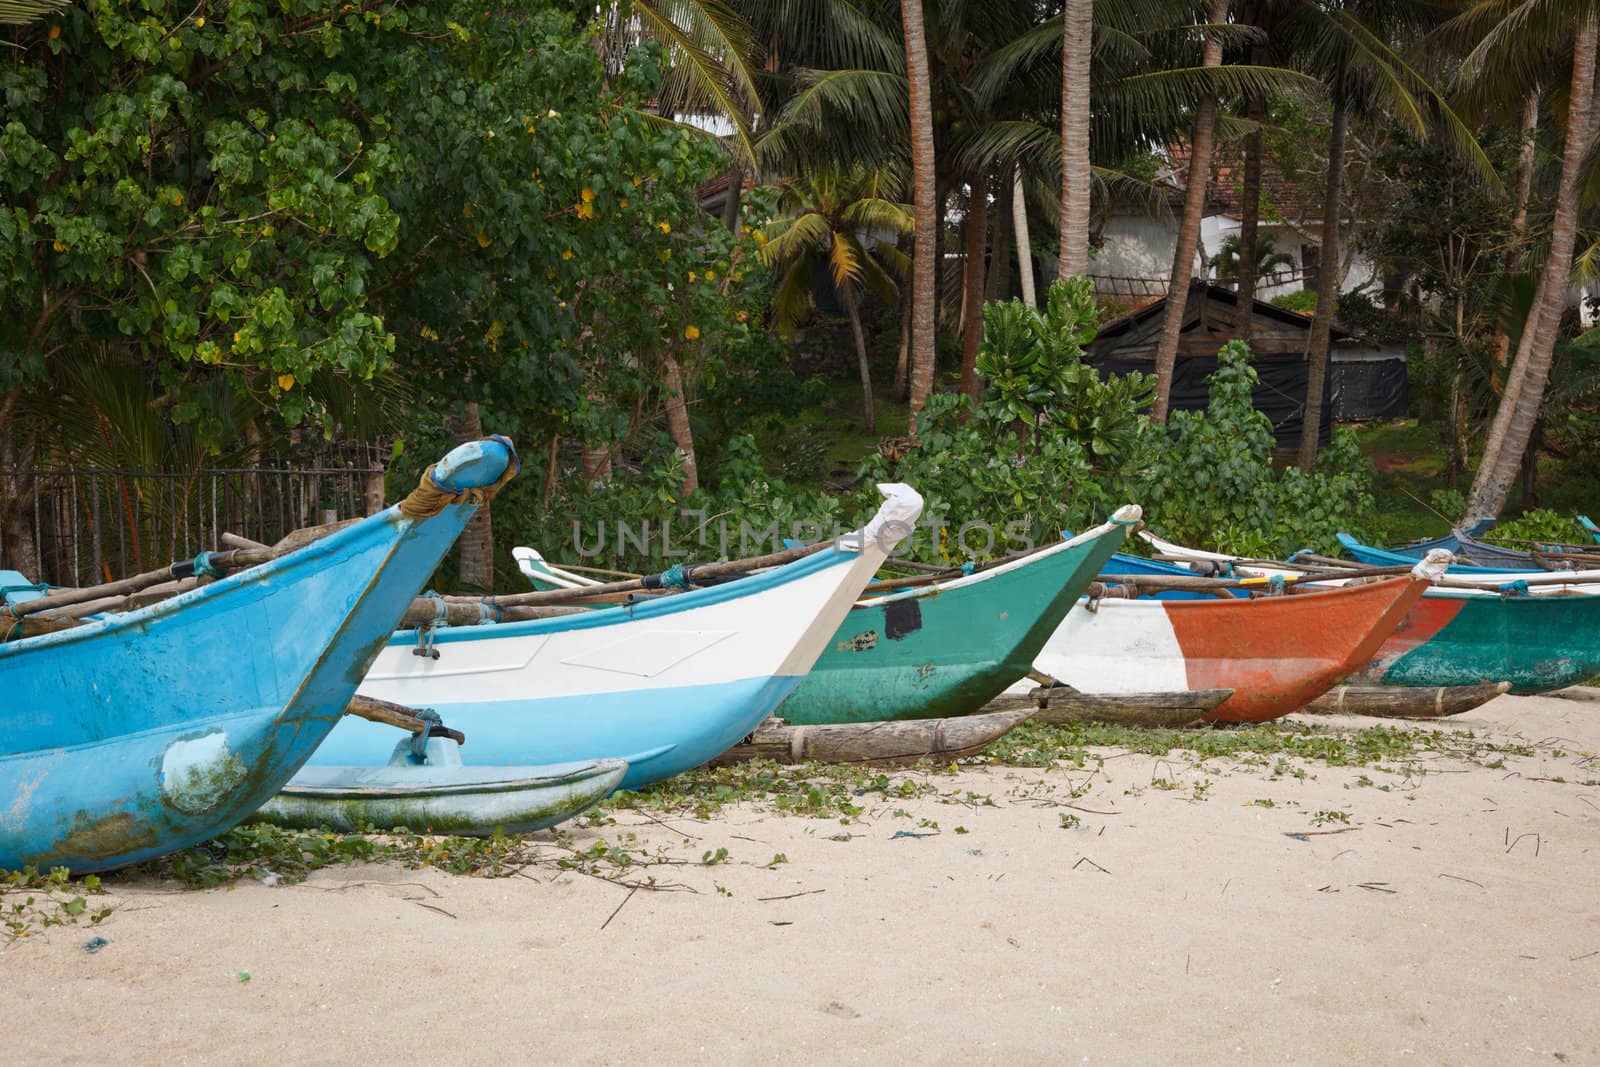 Fishing boats on beach by dimol